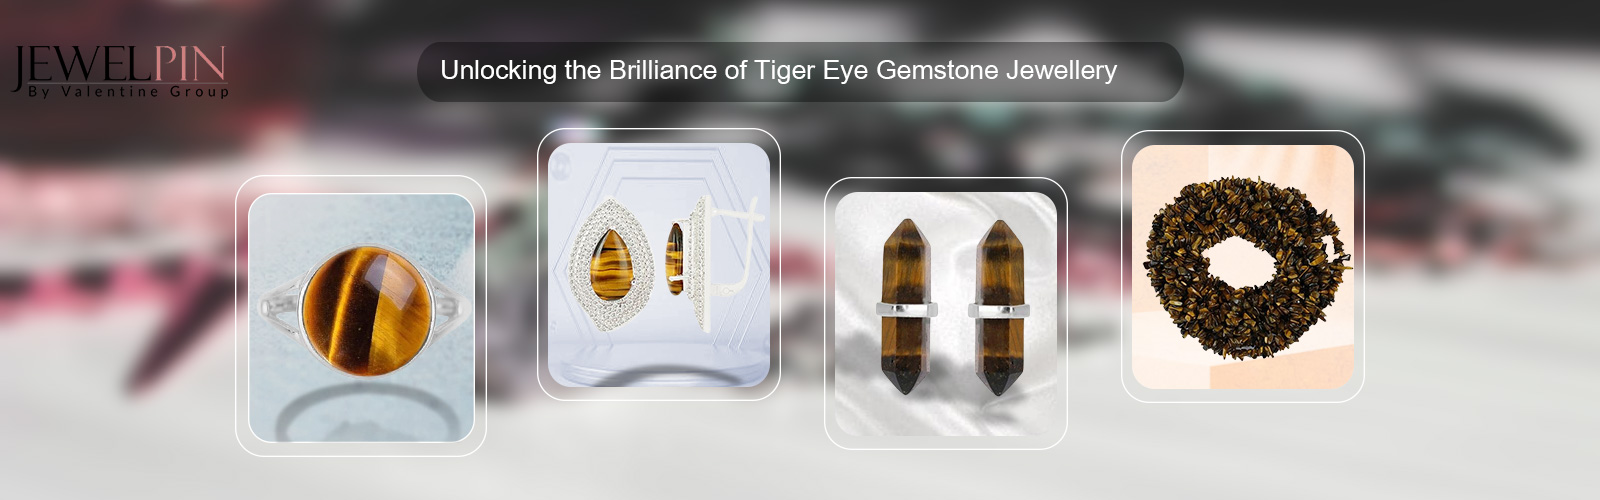 unlocking the brilliance of tiger eye gemstone jewellery